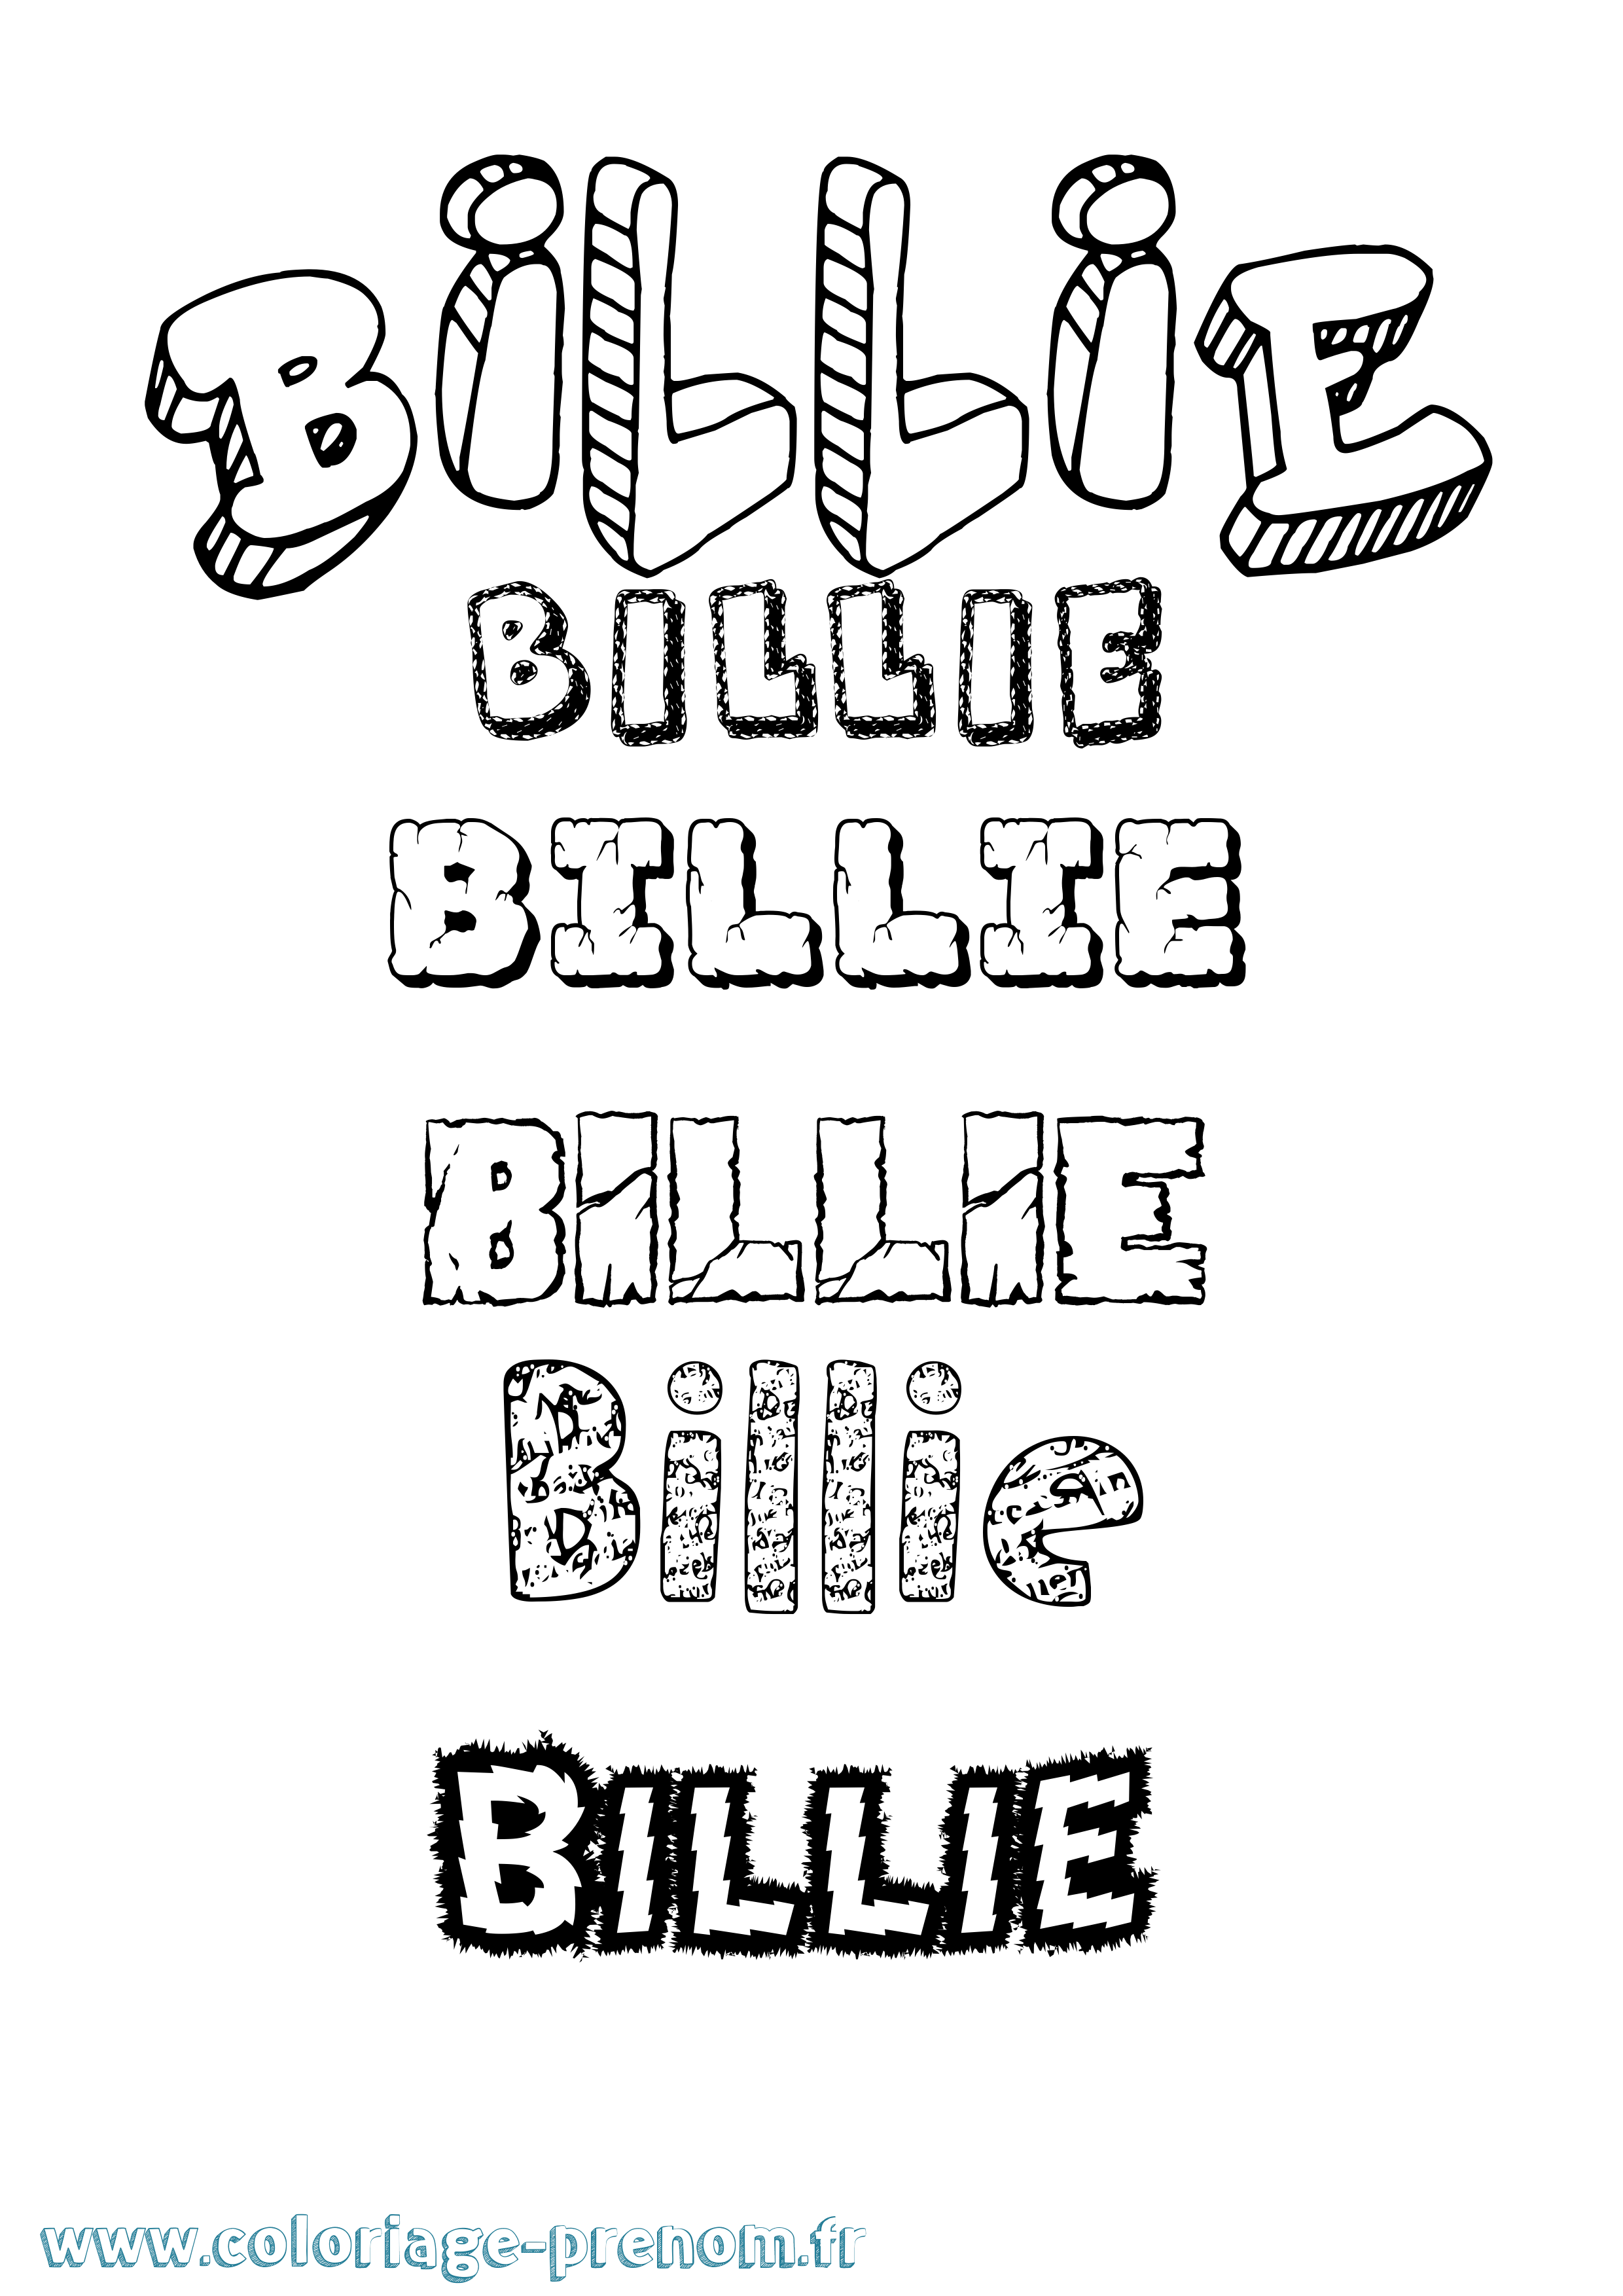 Coloriage prénom Billie